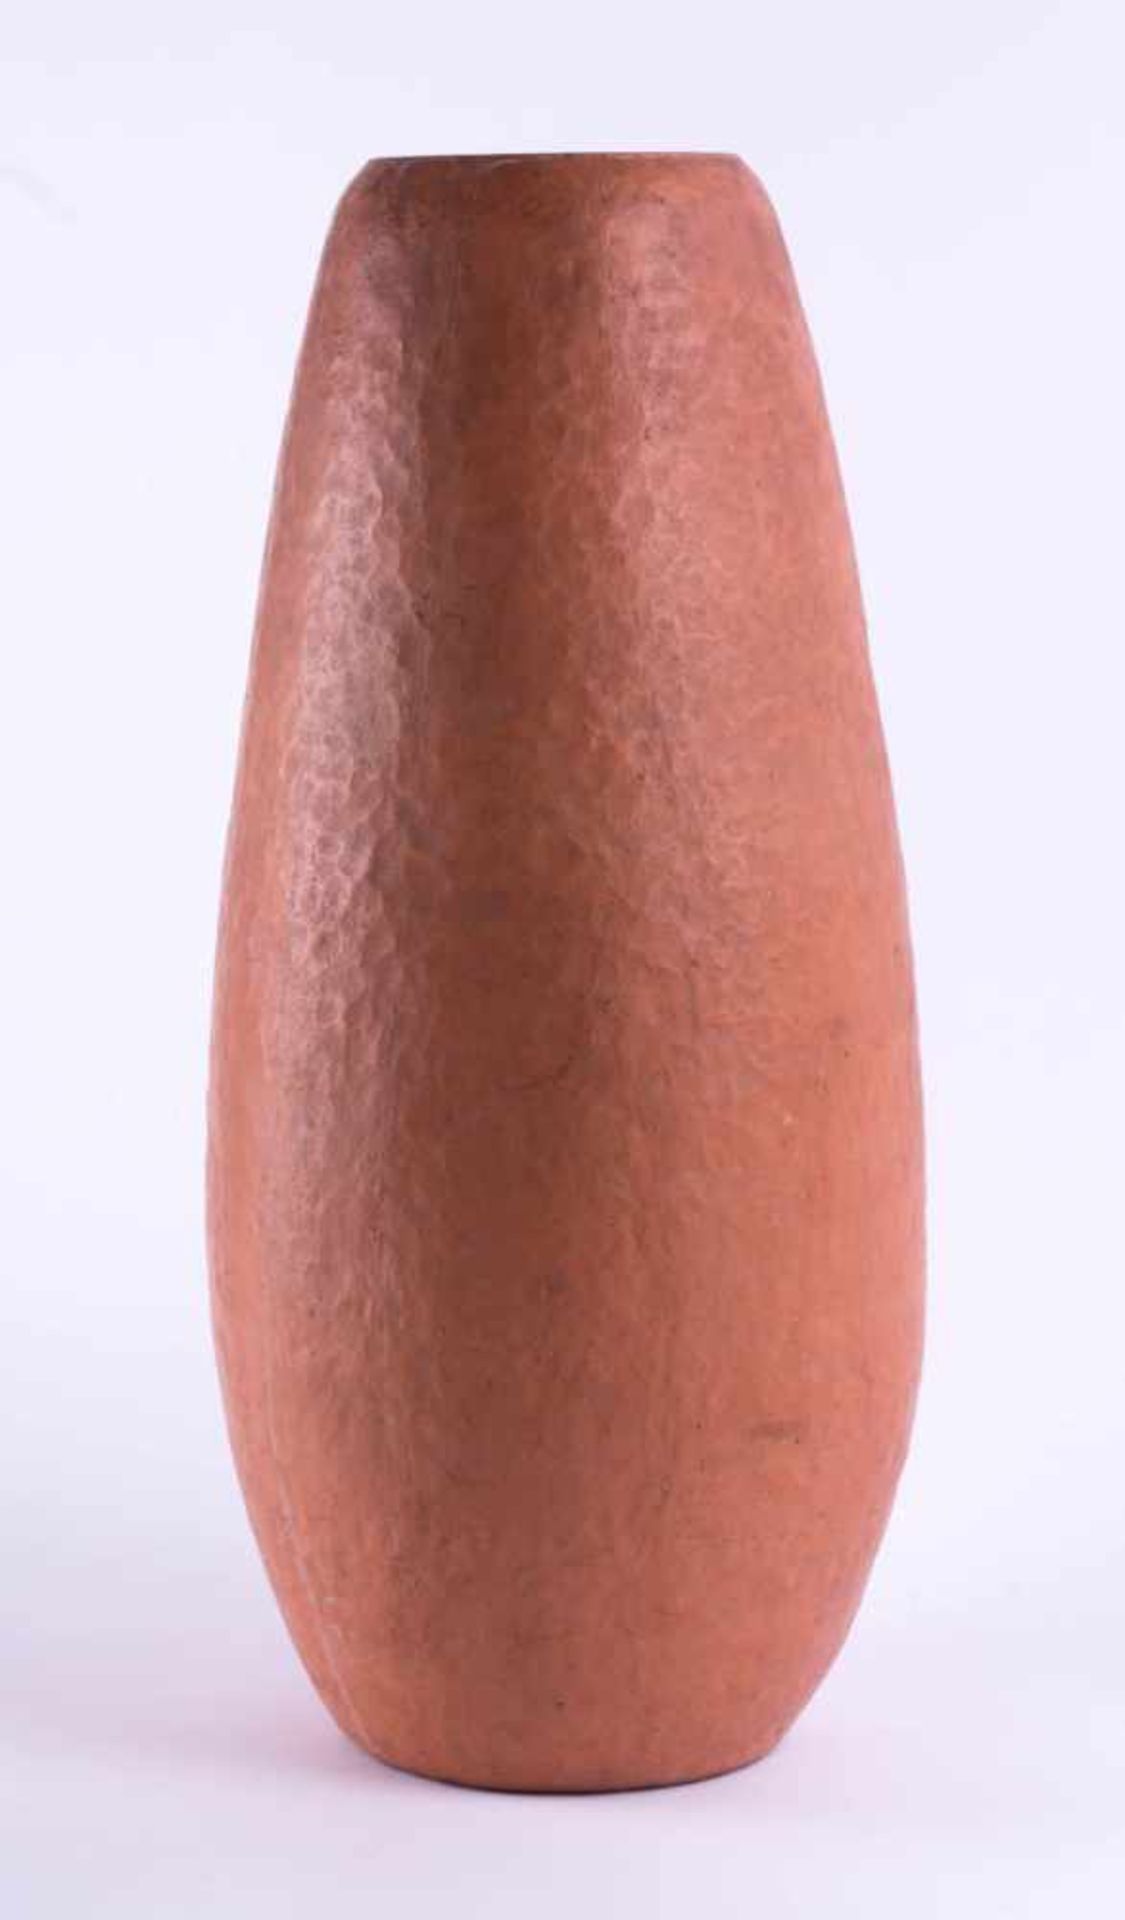 Vase Umkreis Theodor Bogler Keramik, ungedeutet gemarkt, H: 65 cm Vase, Theodor Bogler circle